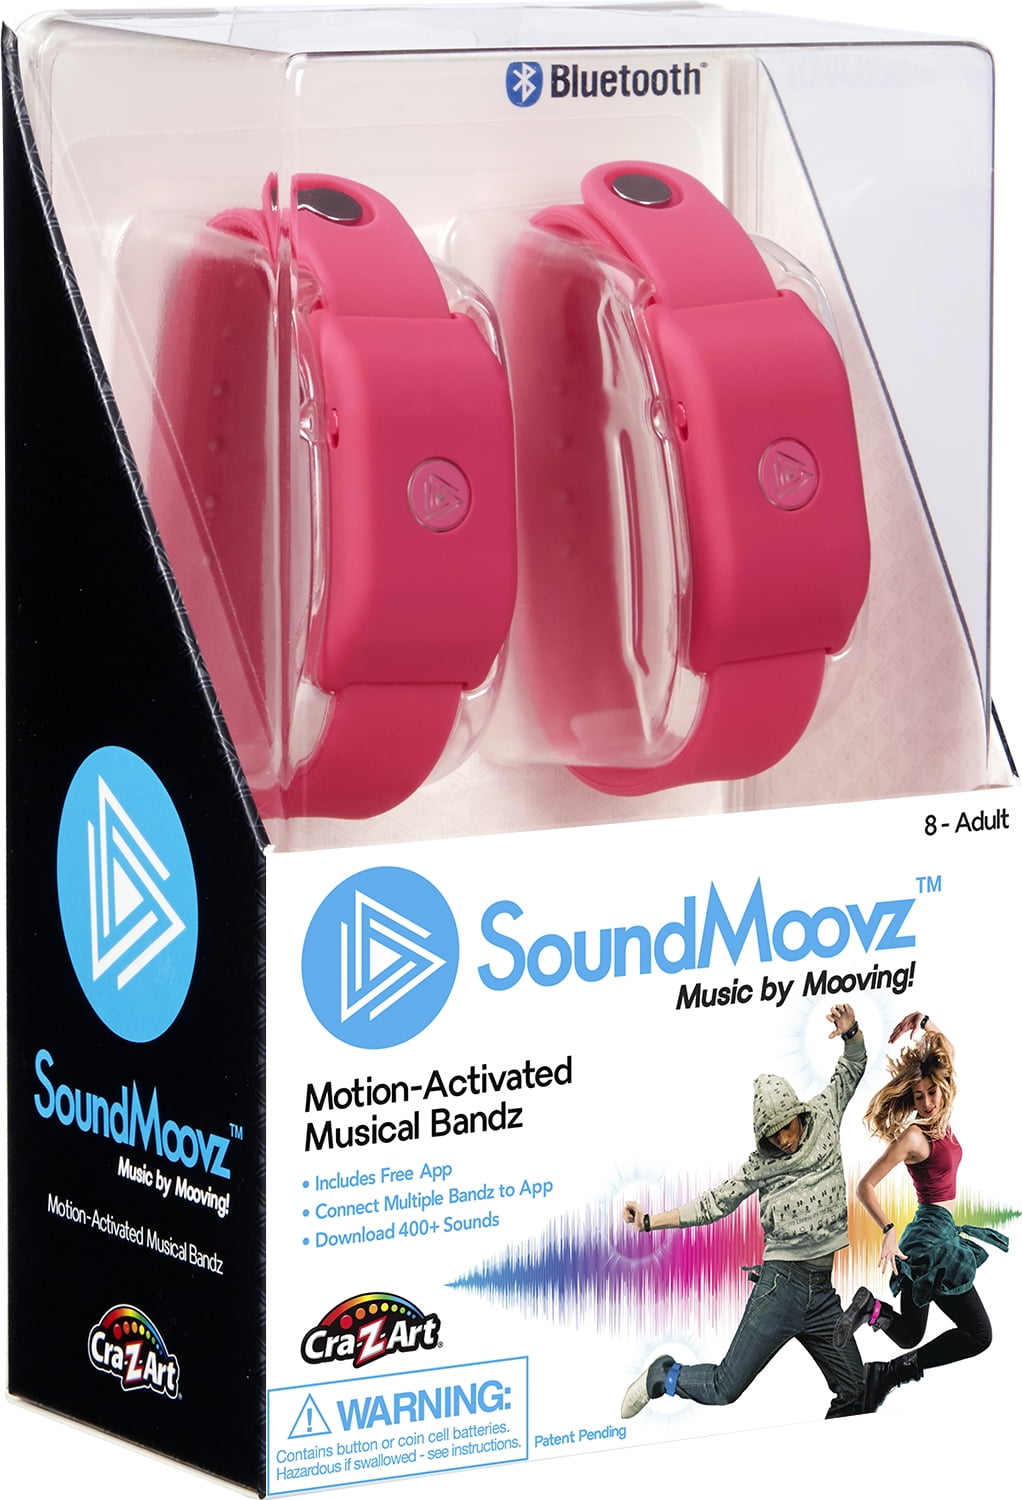 Soundmoovz Bluetooth Motion Activated Musical Arm Bandz Black CRA-Z-ART for sale online